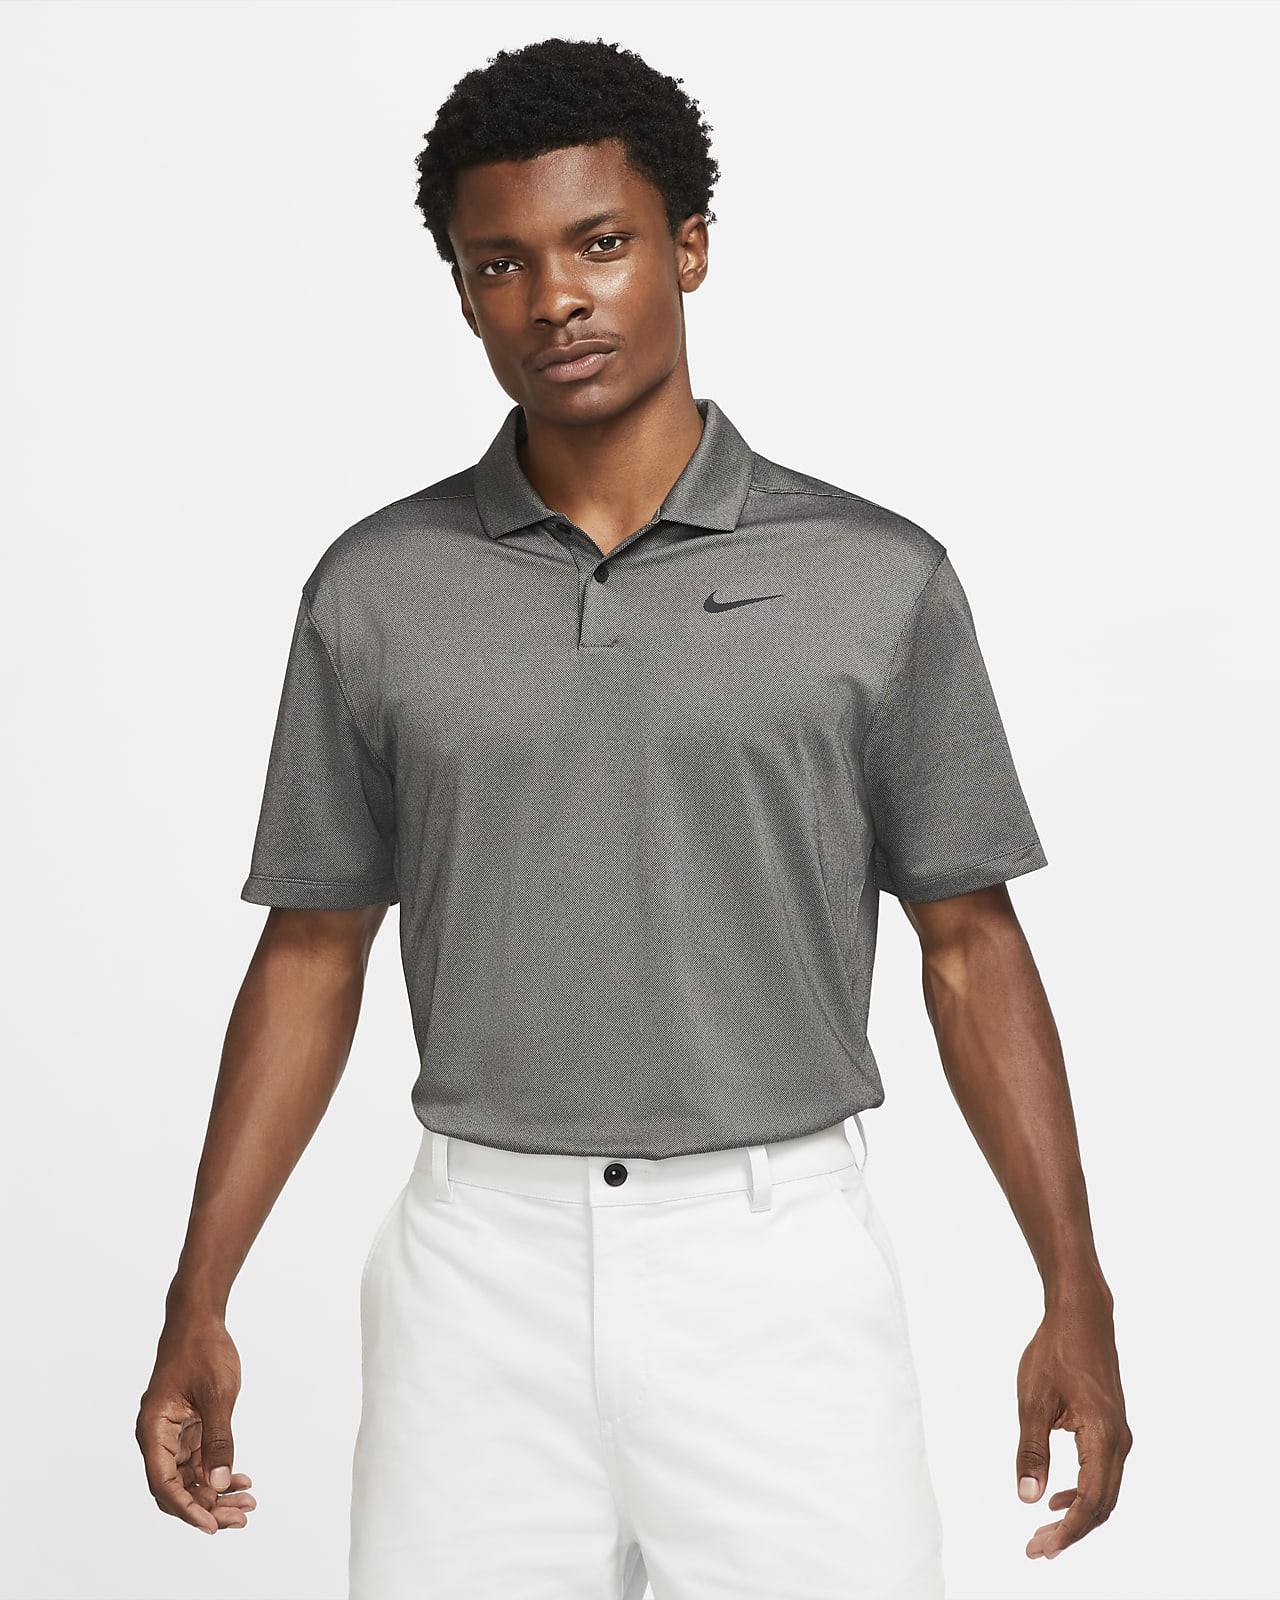 Nike Dri-FIT Vapor Men's Golf Polo. Nike LU